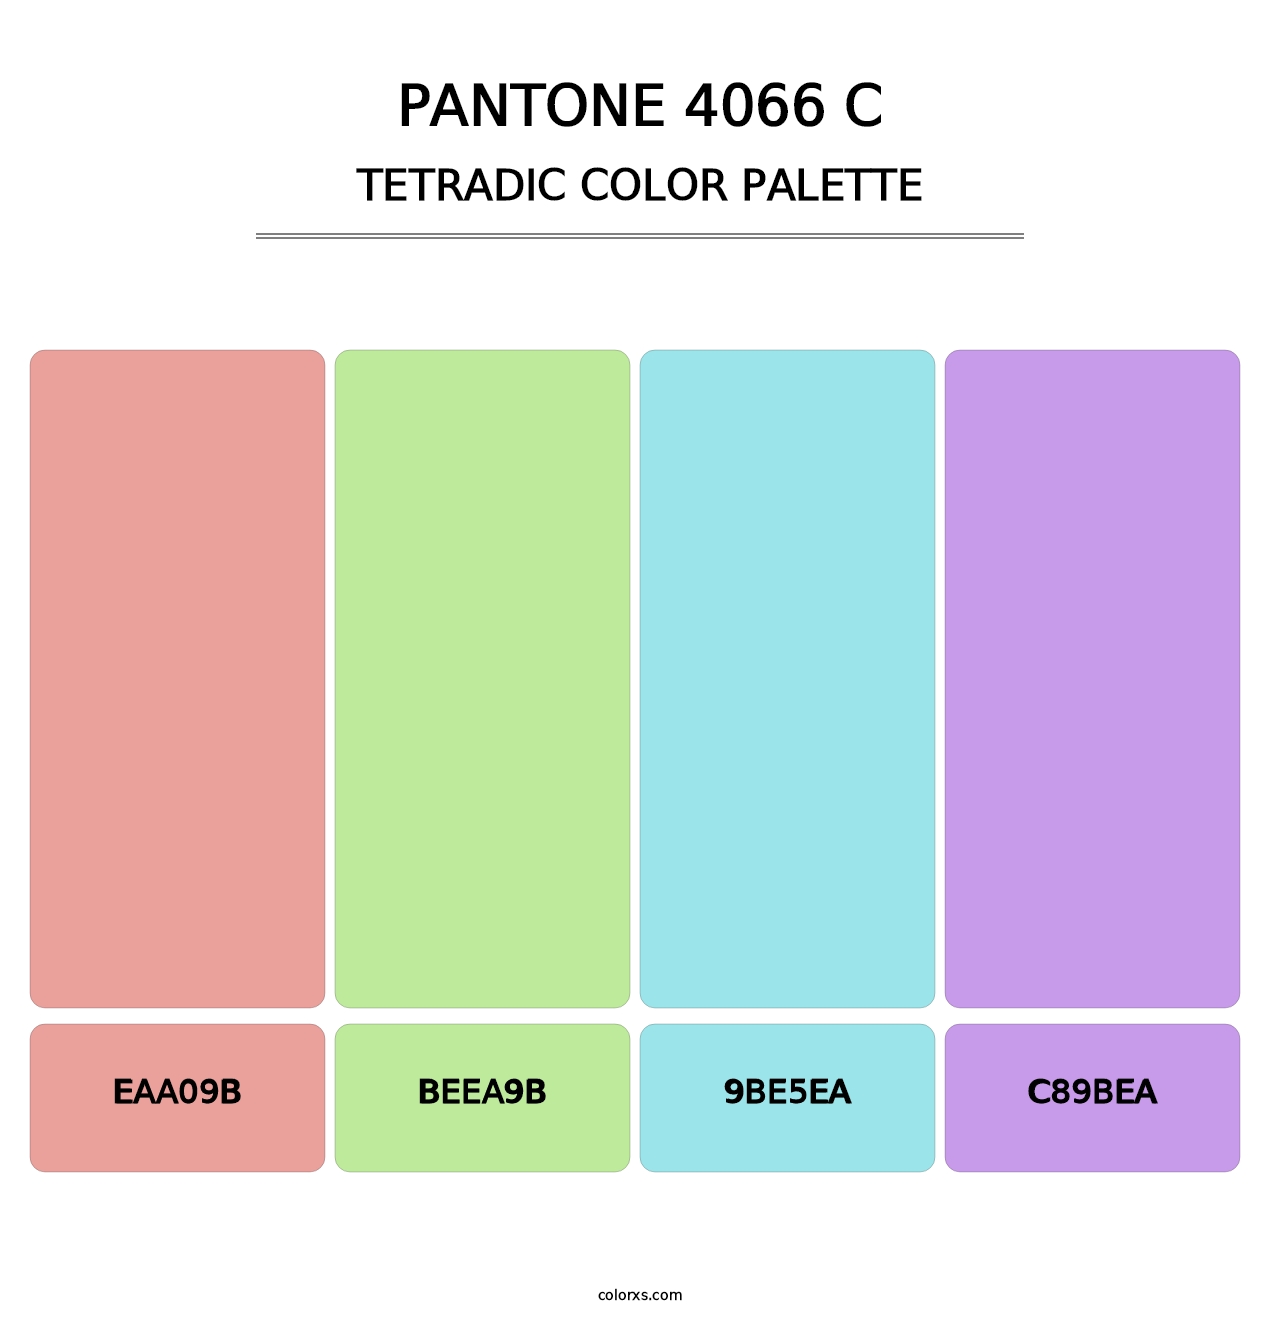 PANTONE 4066 C - Tetradic Color Palette